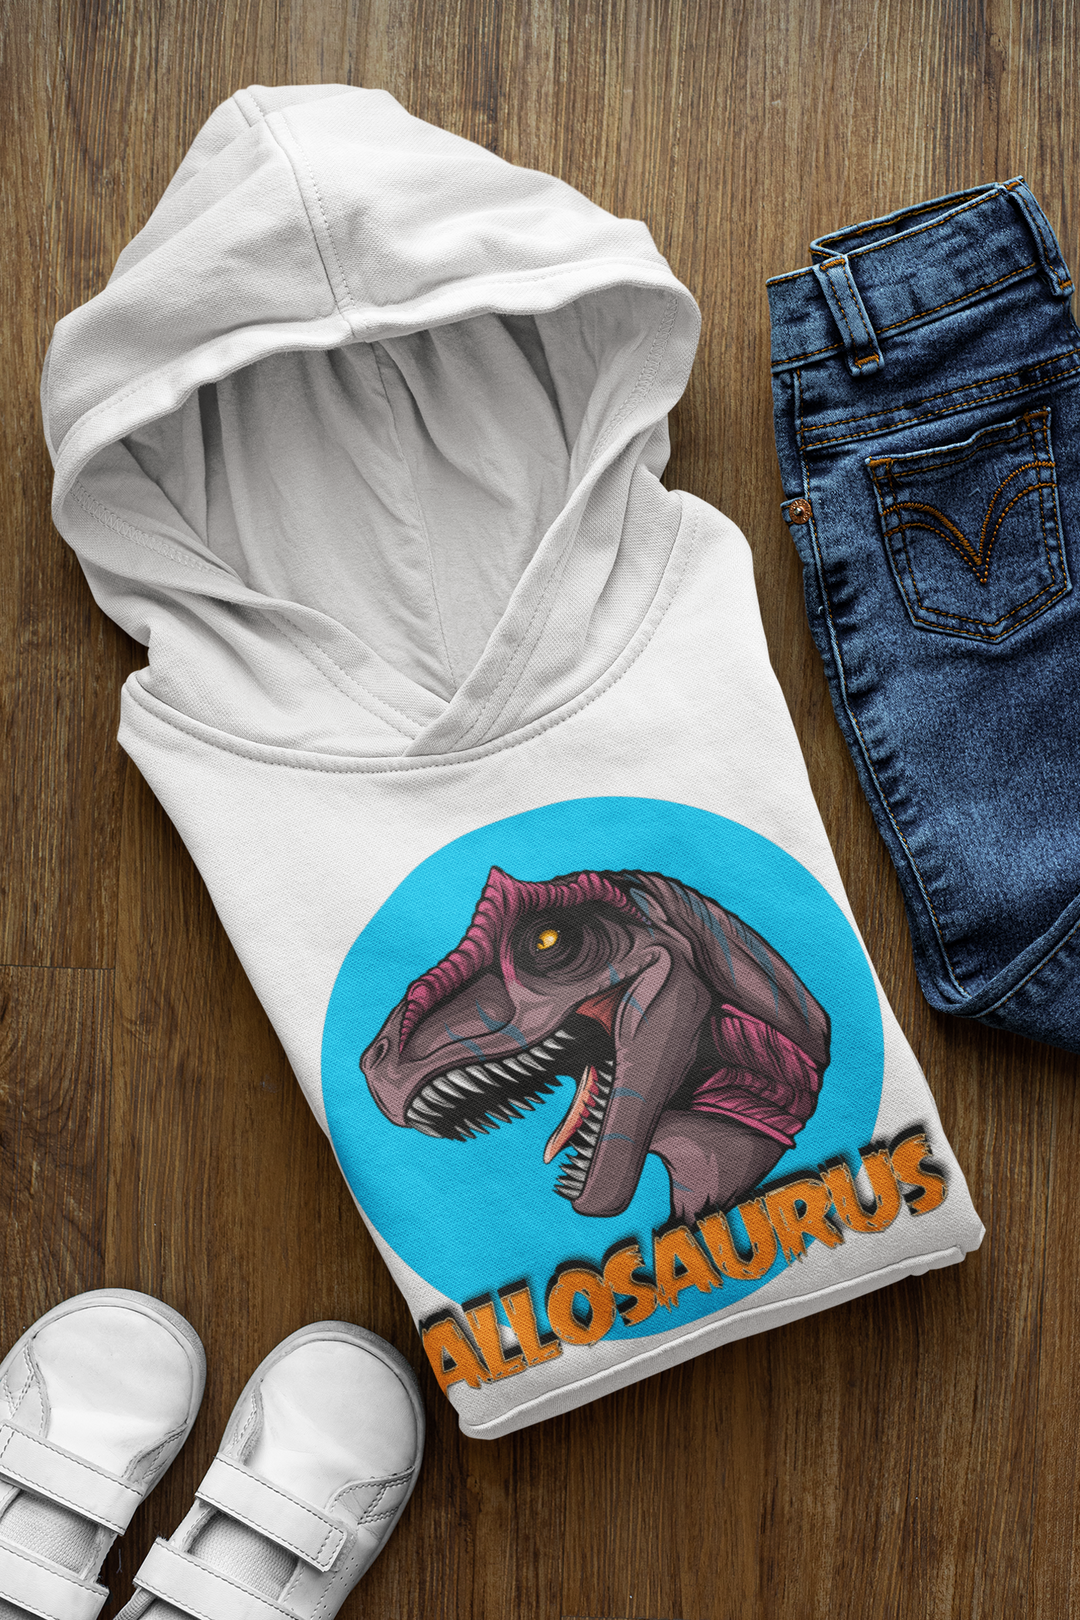 Kids Allosaurus Head Hoodie | Jurassic Studio